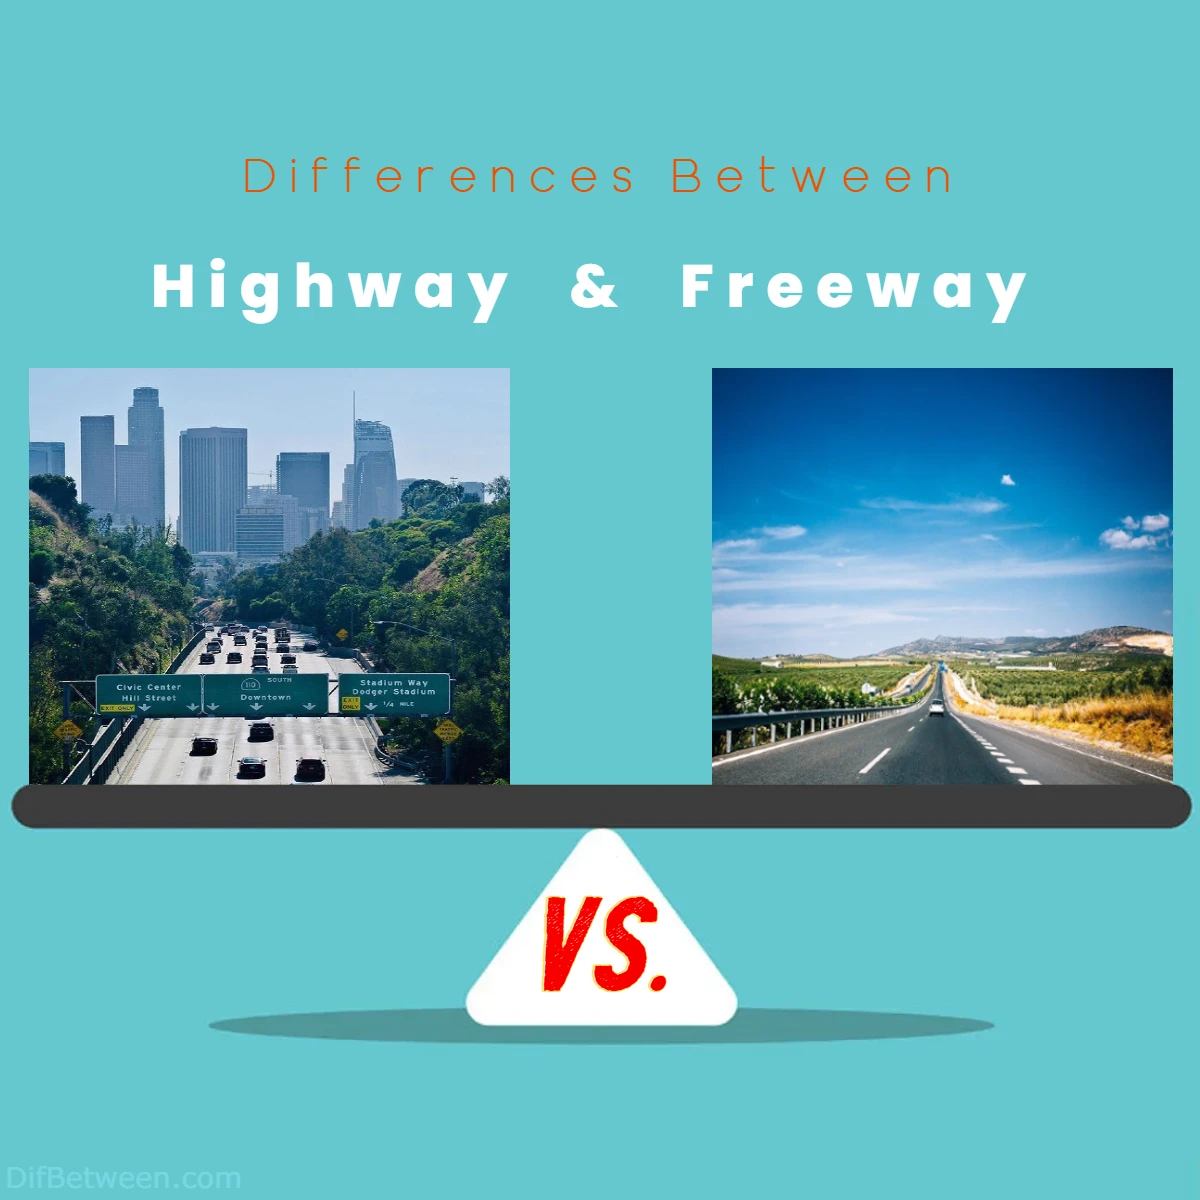 Differences Between Highway vs Freeway